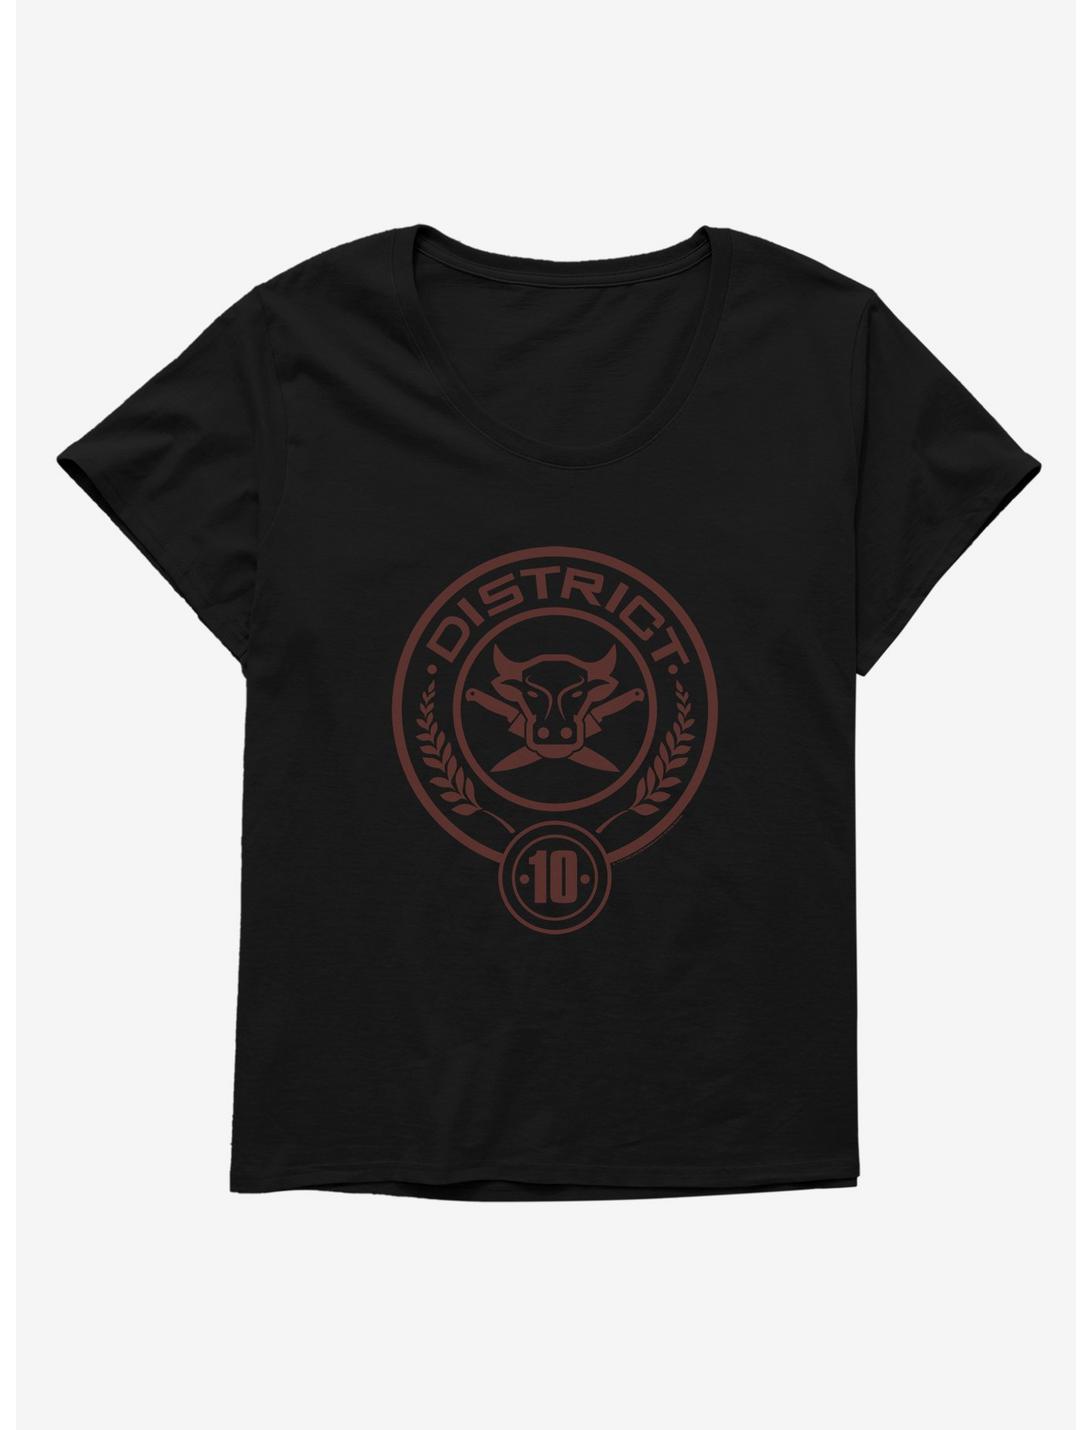 Hunger Games District 10 Logo Womens T-Shirt Plus Size, BLACK, hi-res